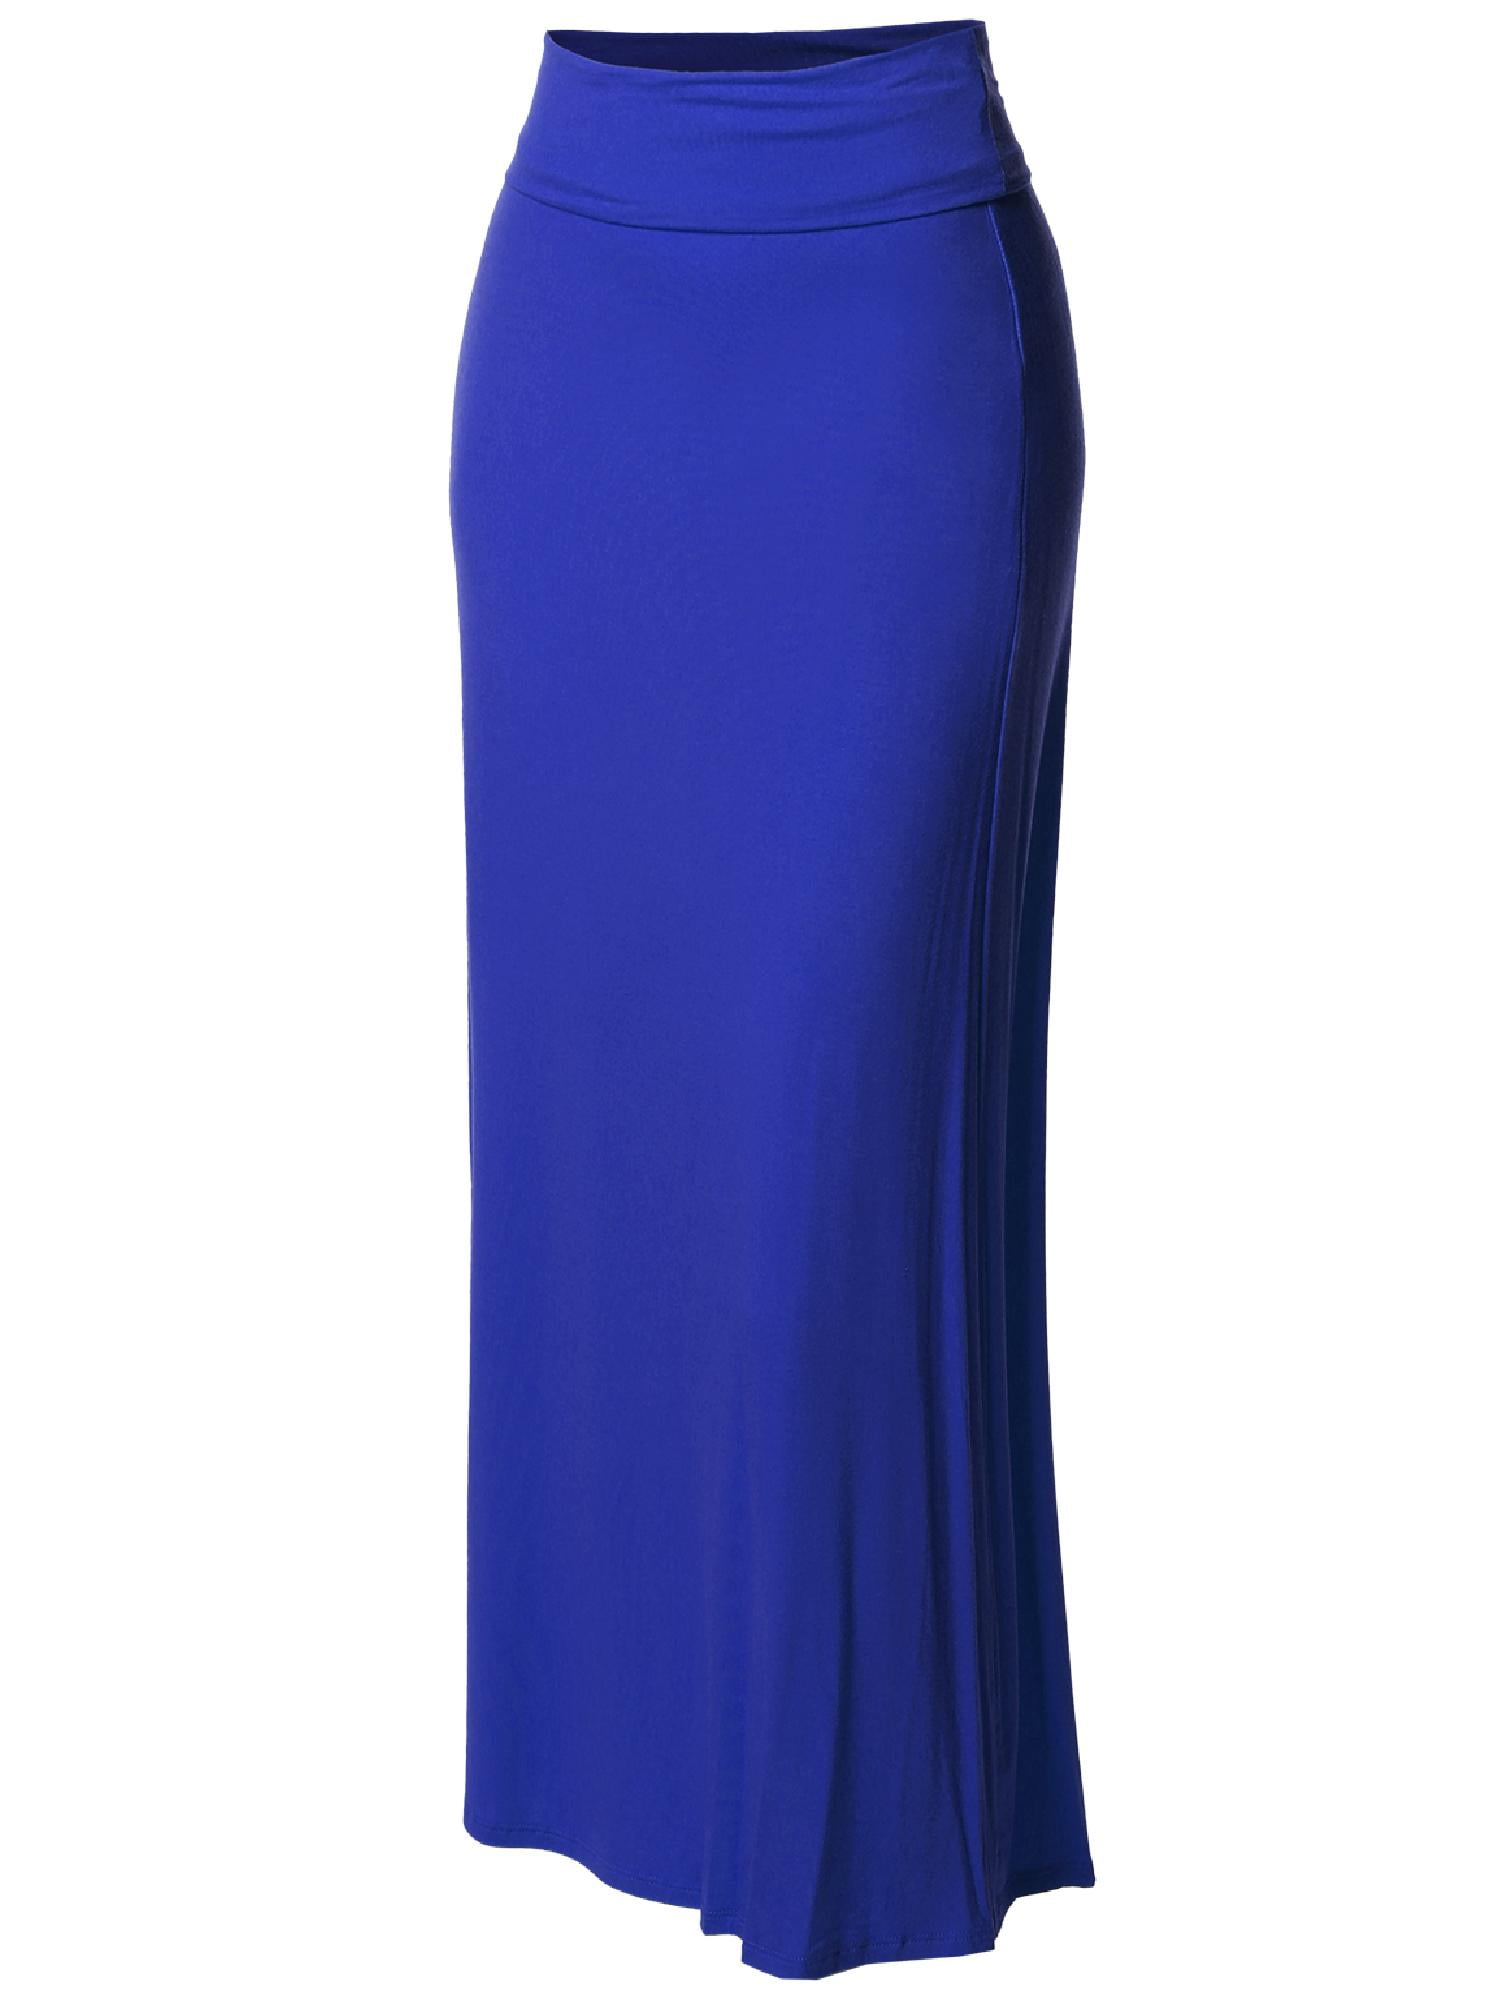 FashionOutfit Women's Stylish Fold Over Flare Long Maxi Skirt - Walmart.com